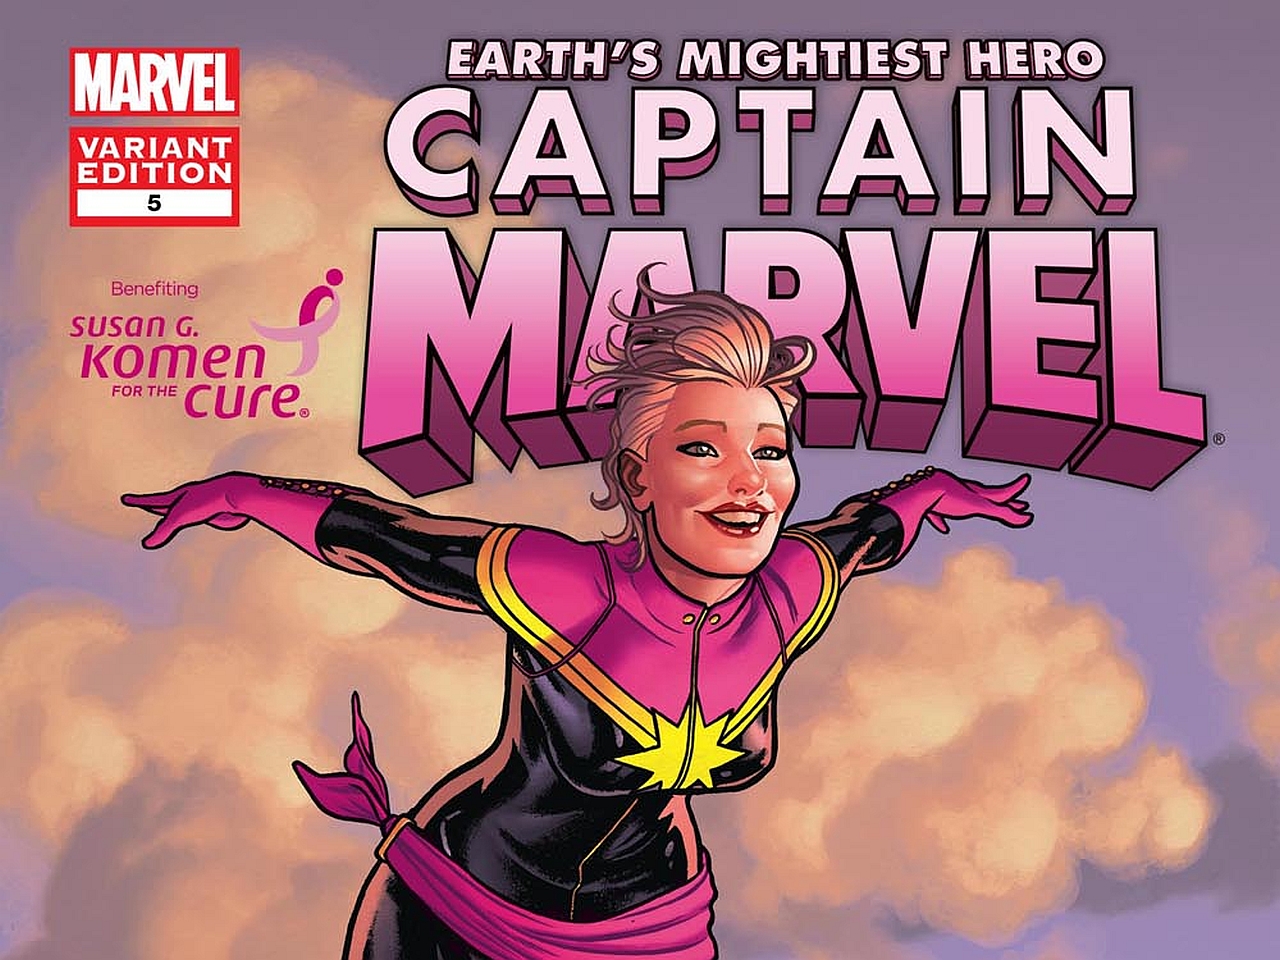 Descarga gratuita de fondo de pantalla para móvil de Historietas, Capitana Marvel, Carol Danvers.